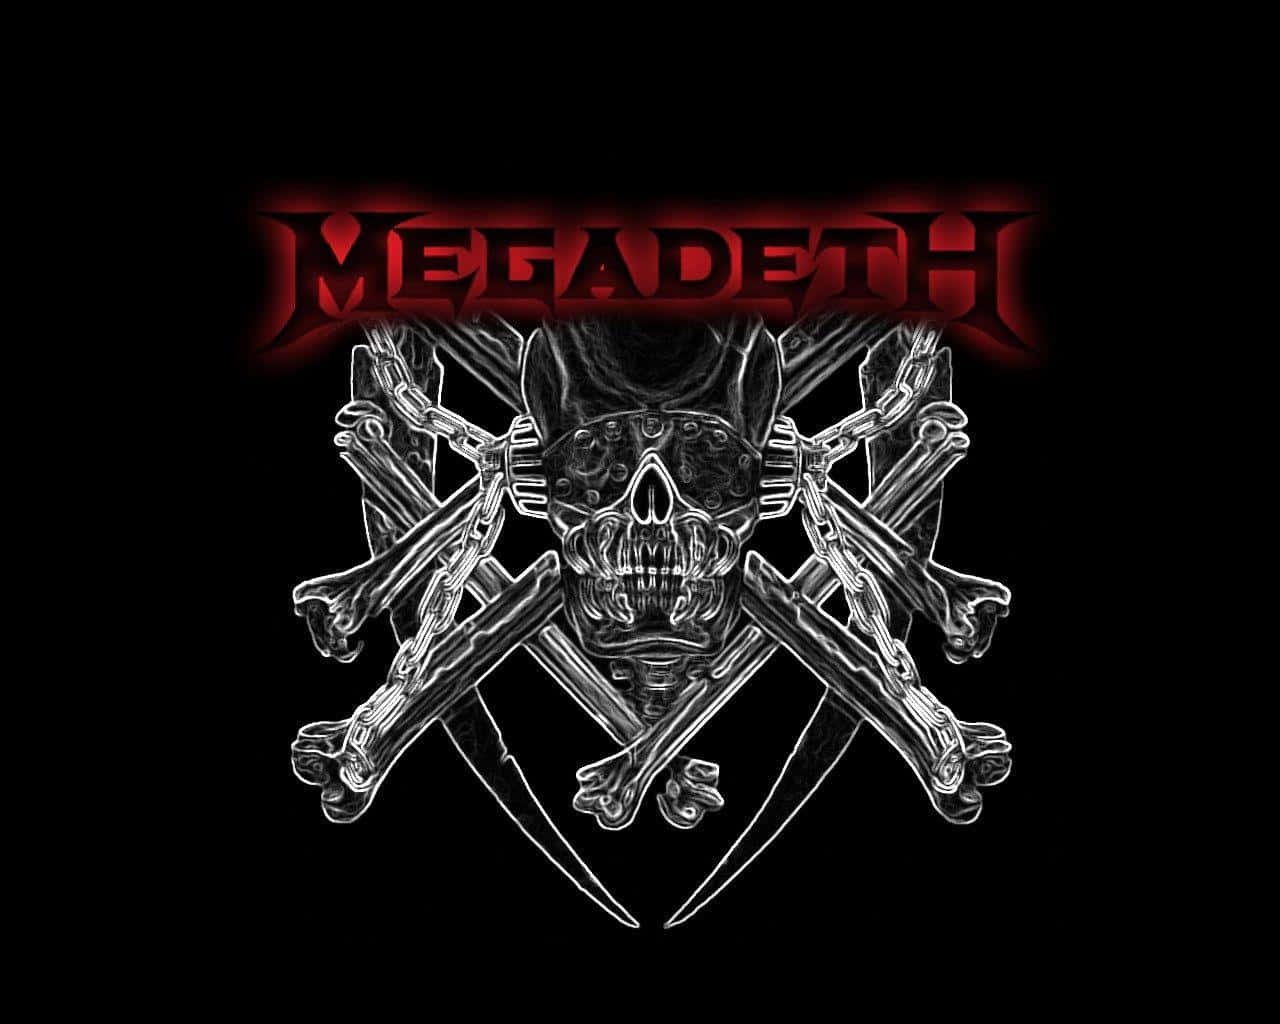 Megadeth Band Logo Skulland Crossbones Wallpaper